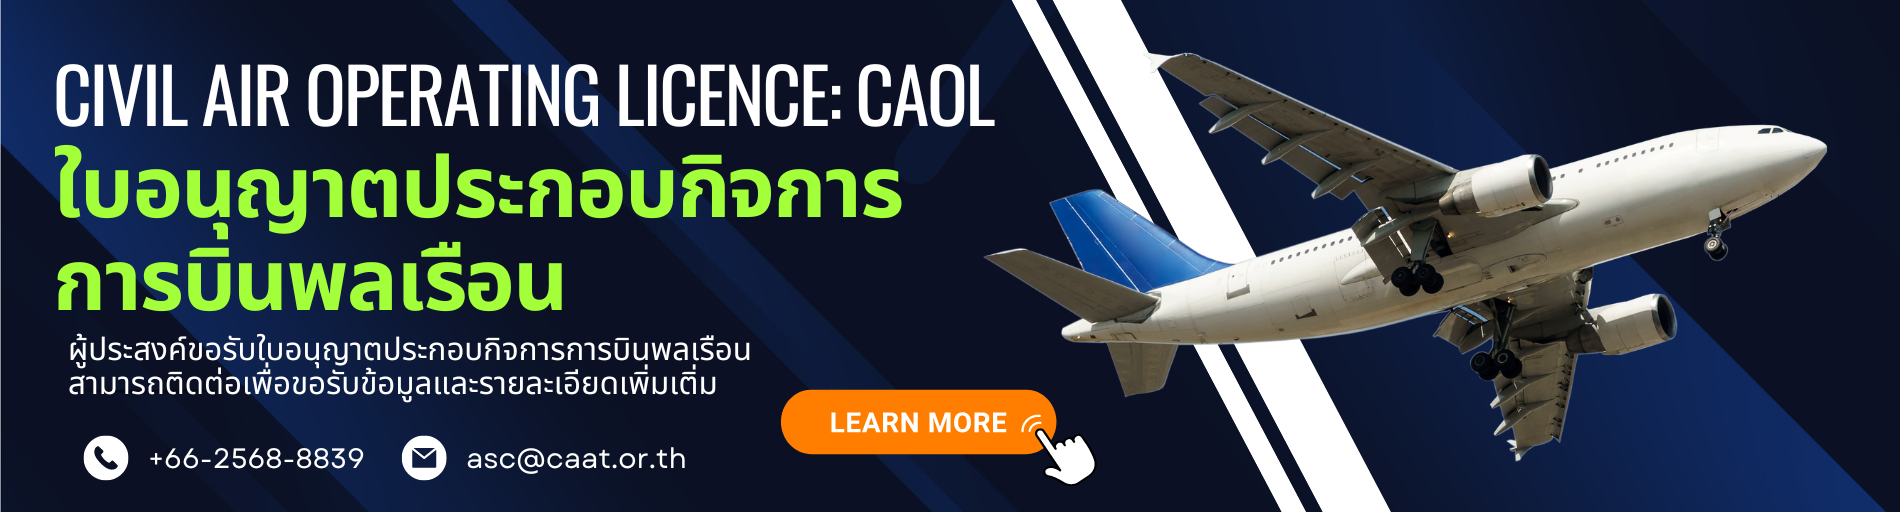 Civil Air Operating Licence: CAOL